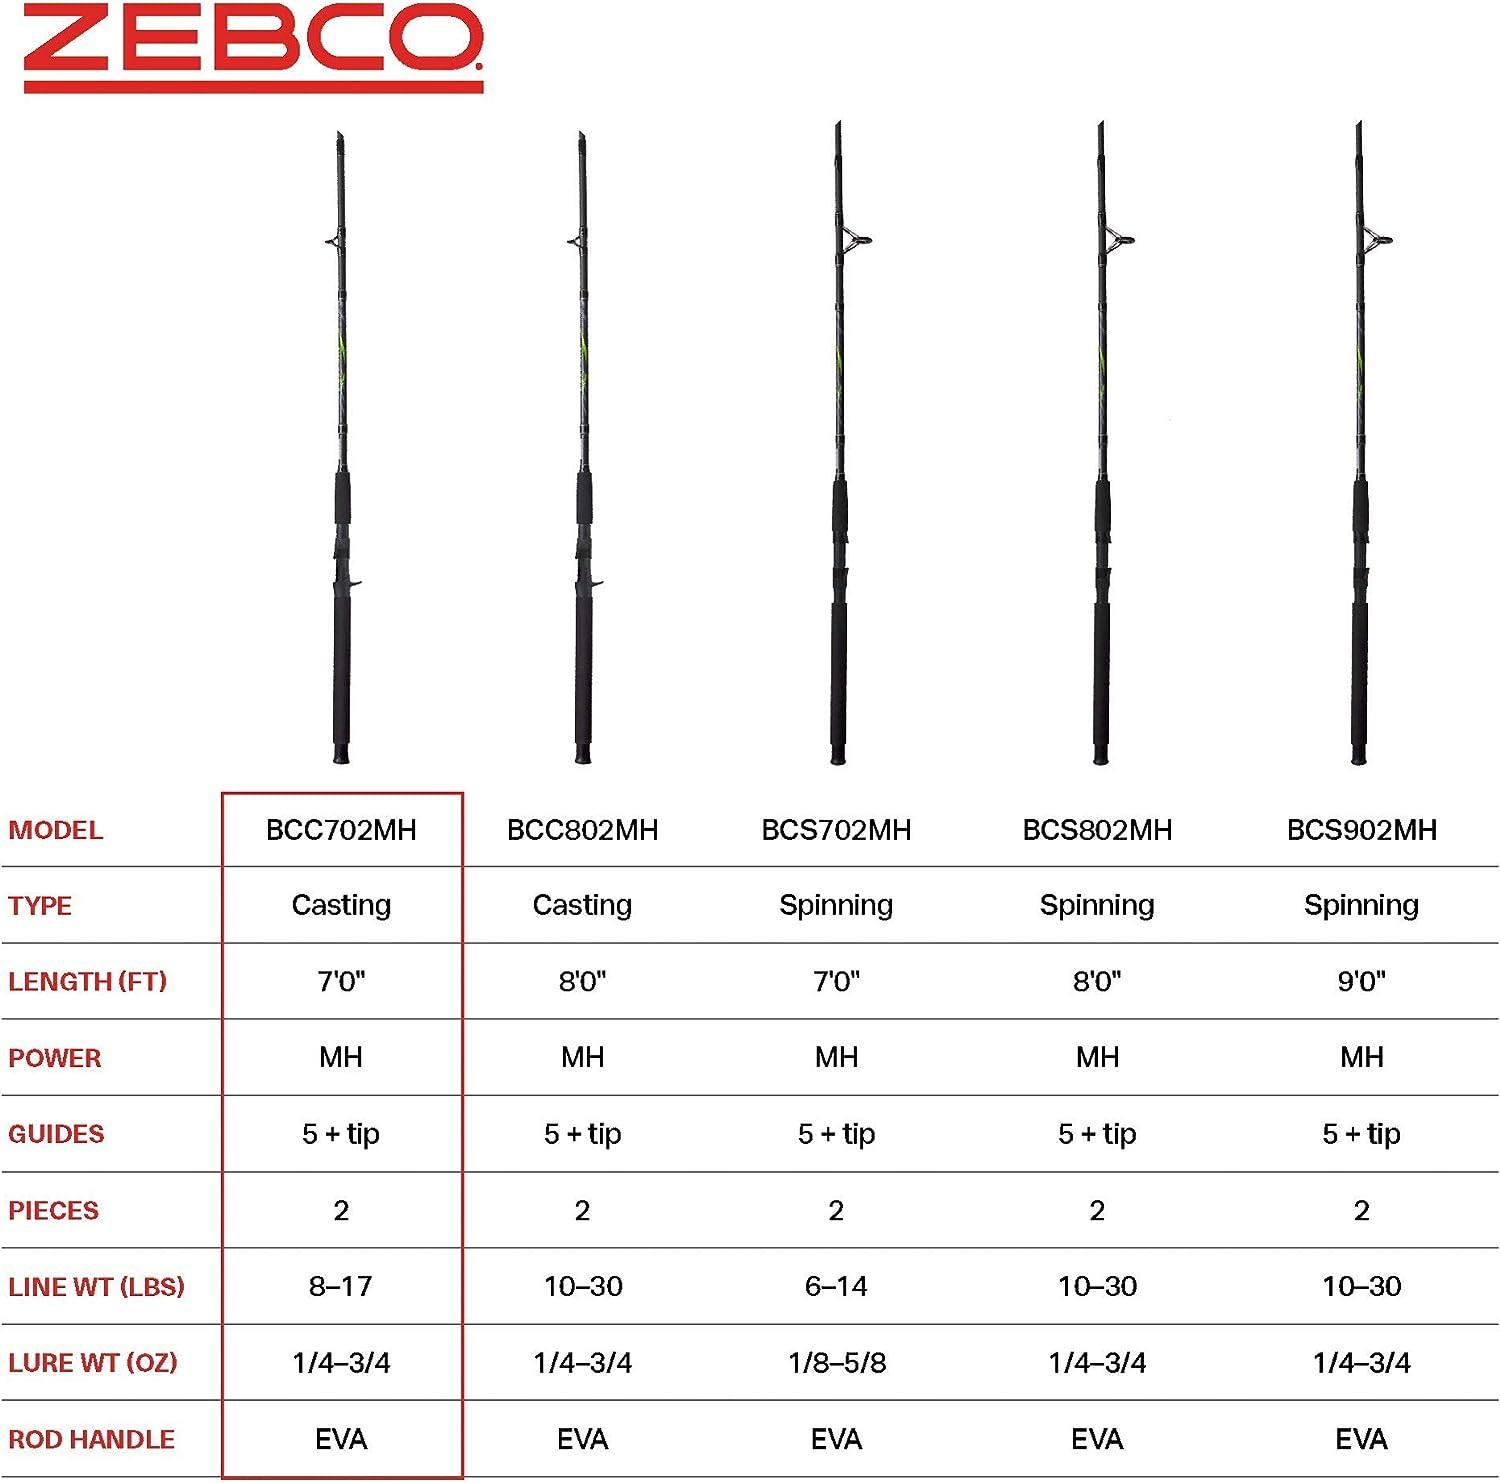 Zebco Big Cat Casting Fishing Rod, 7-Foot 2-Piece Fiberglass Fishing Pole,  High-Visibility Rod Tip, Extended EVA Rod Handle, Shock-Ring Guides,  Medium-Heavy Power, Black/Green